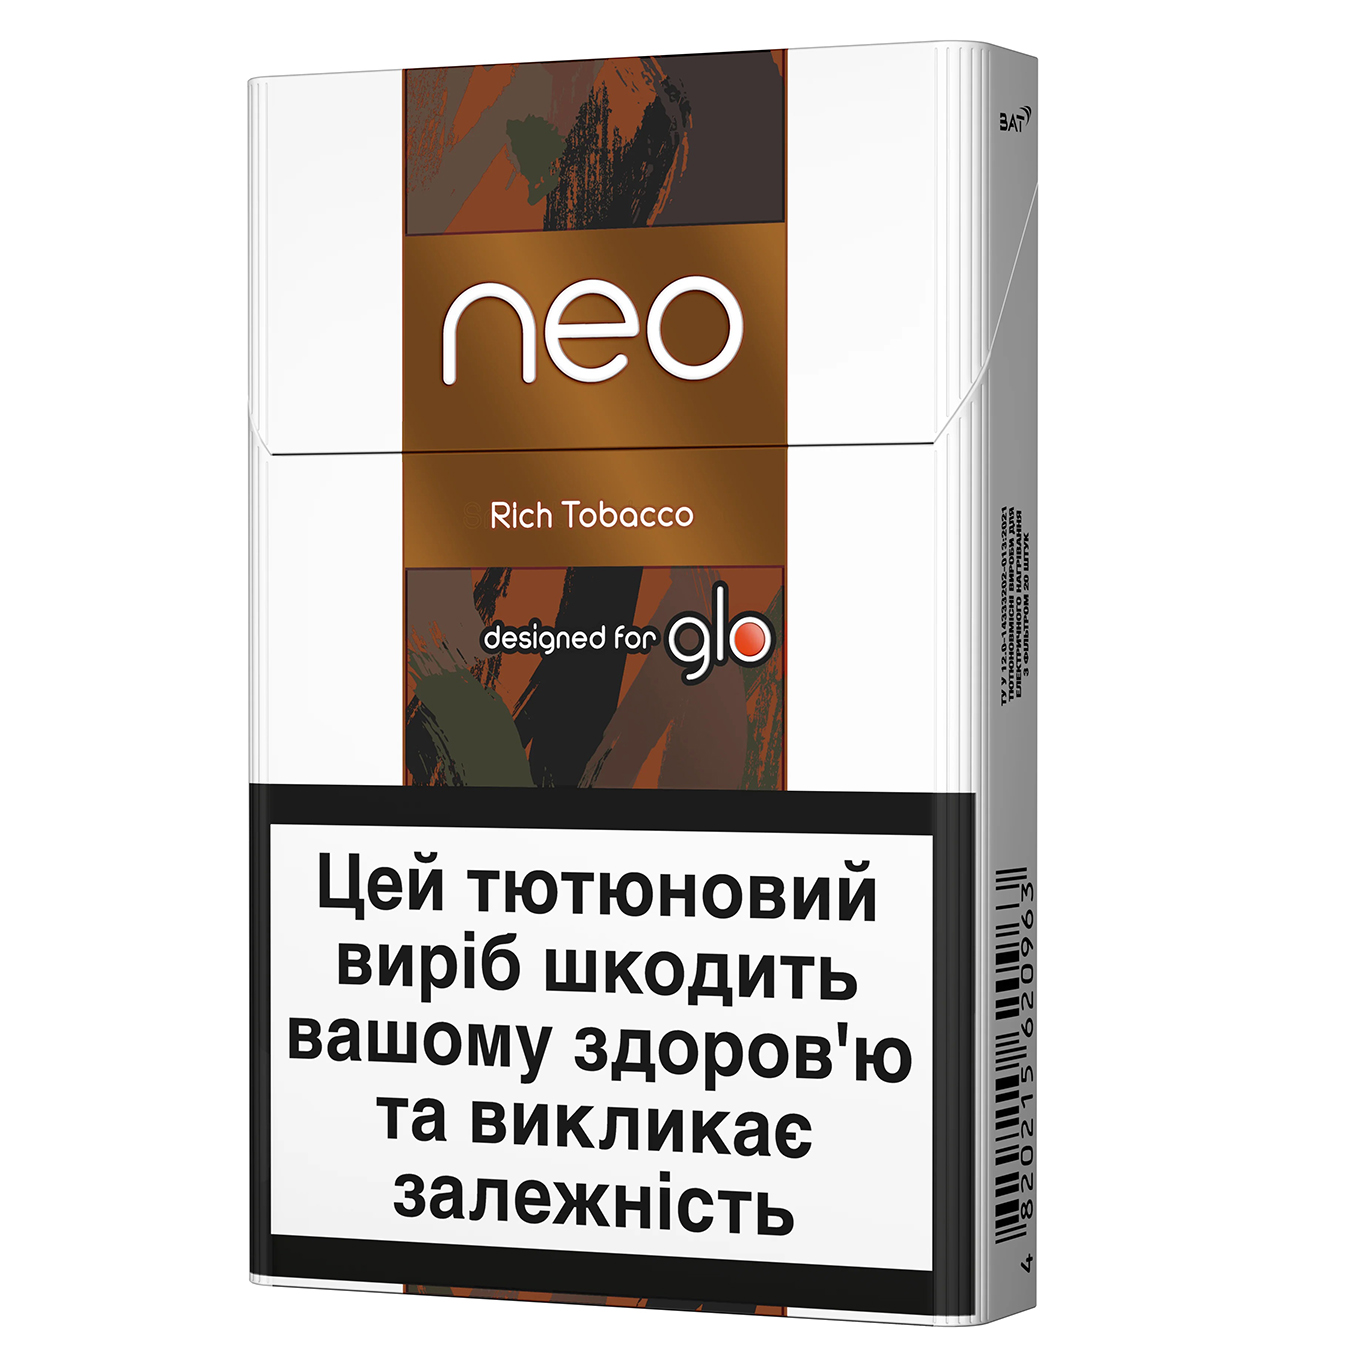 Стіки Kent Neo Rich Tobacco 20шт (ціна вказана без акцизу)